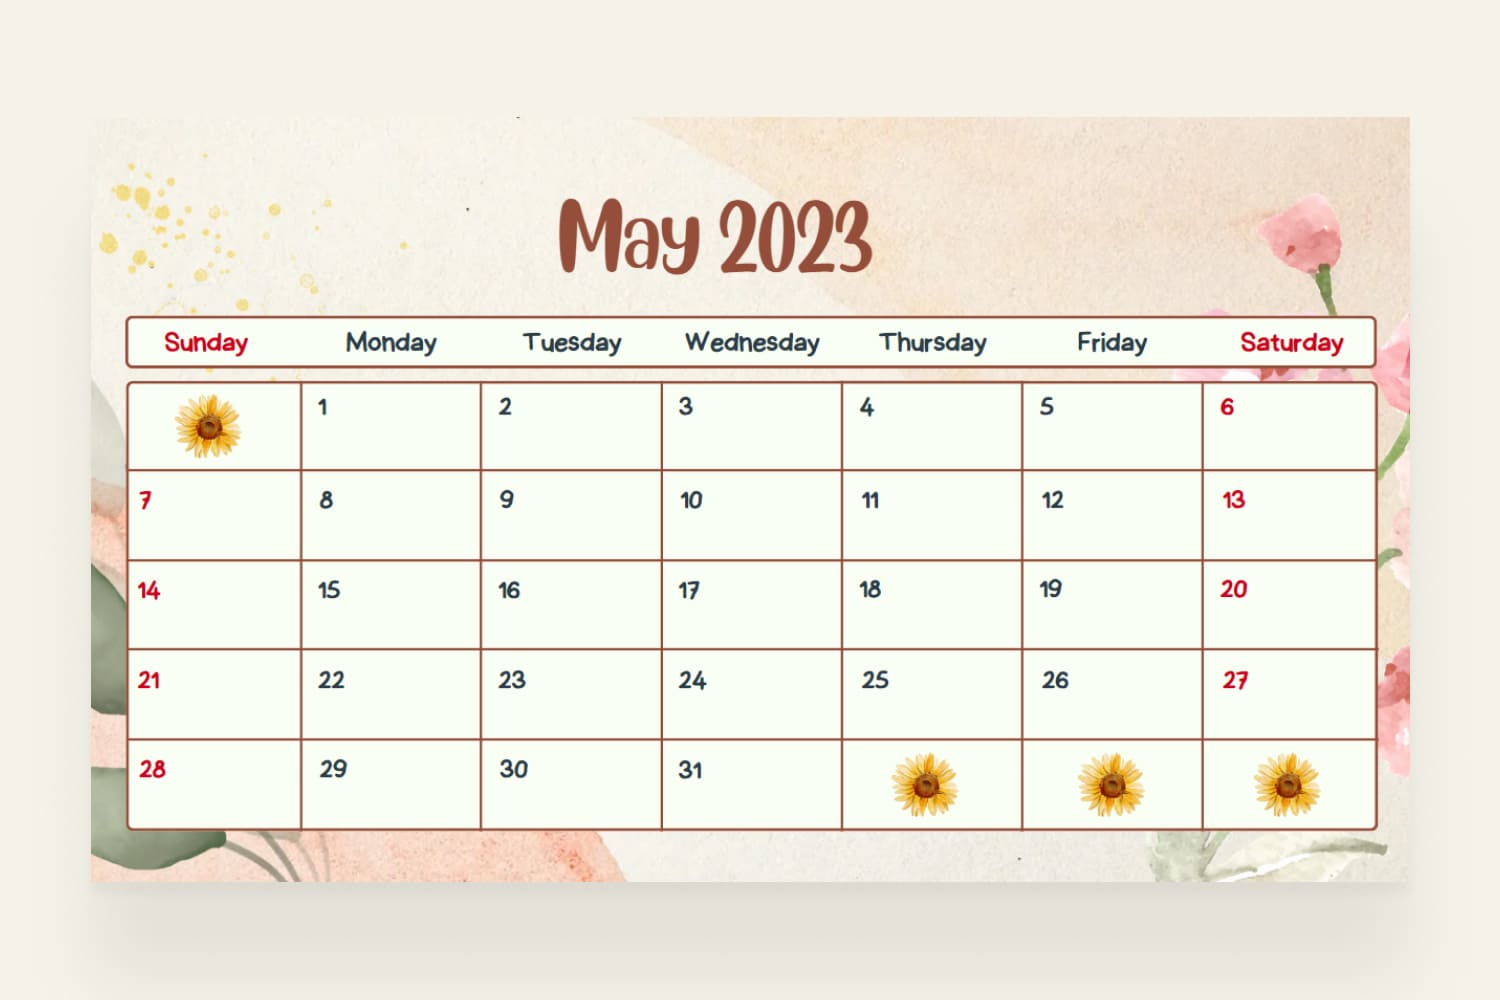 Calendar with a light grayish-orange color scheme and minimalistic typography.